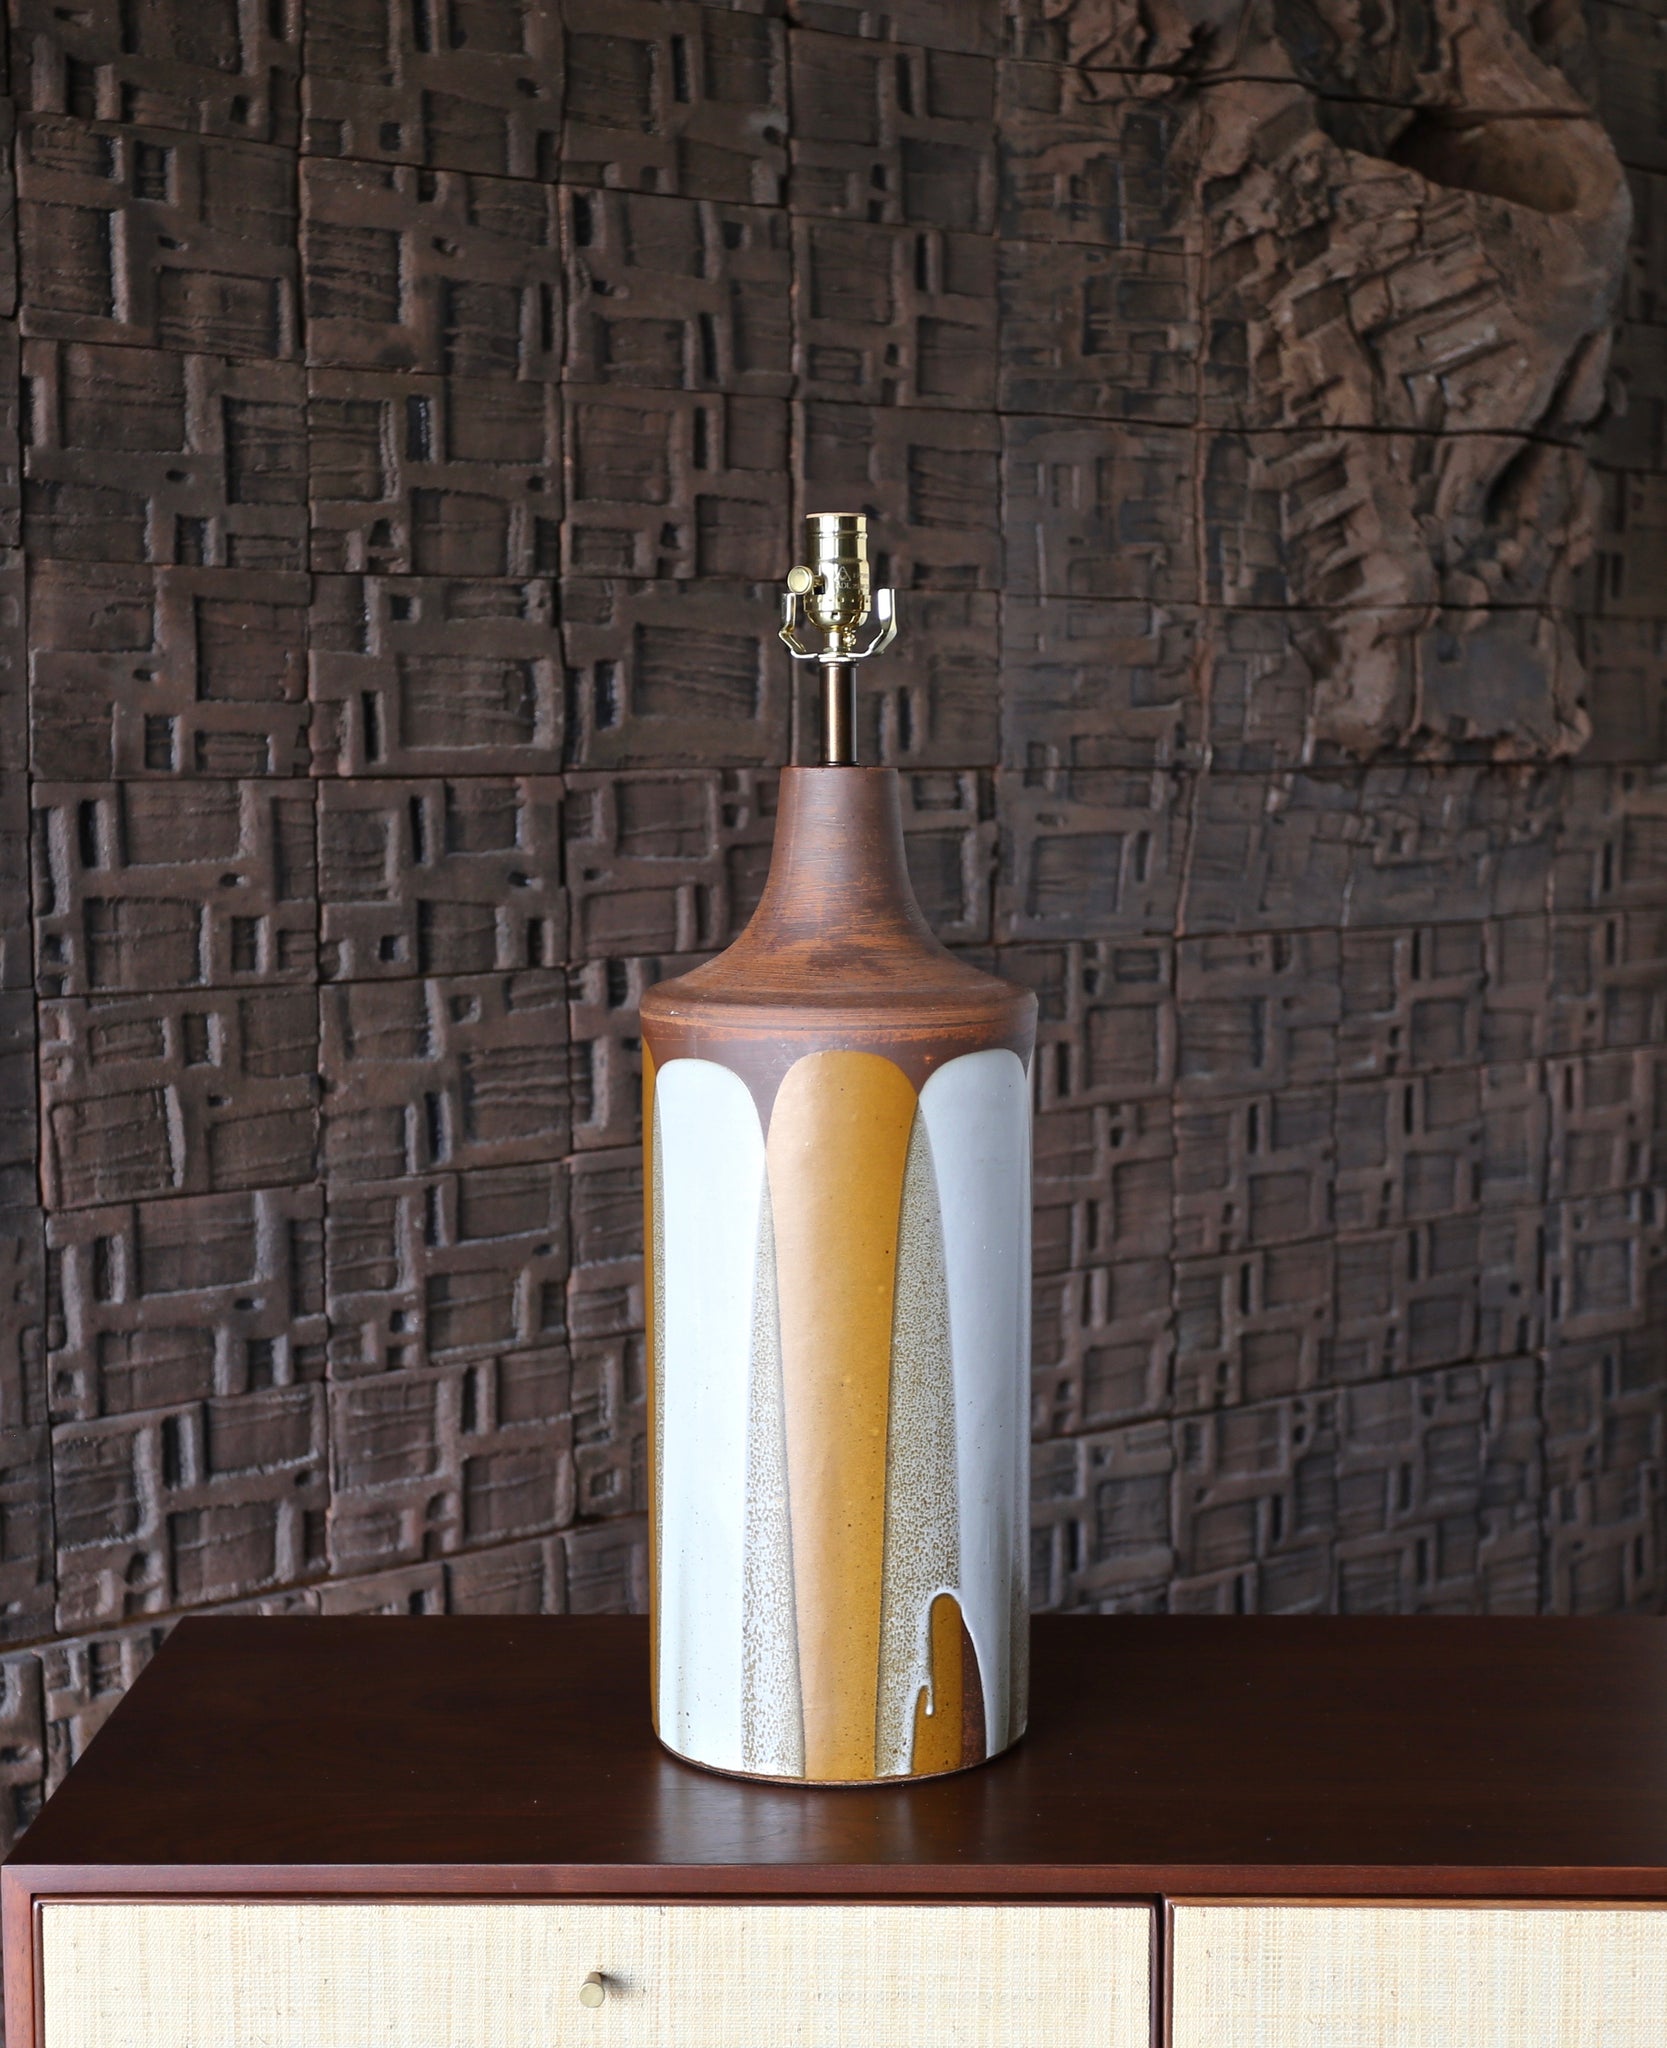 = SOLD = David Cressey Large Scale Pair of "Flame Glaze" Ceramic Lamps, circa 1970